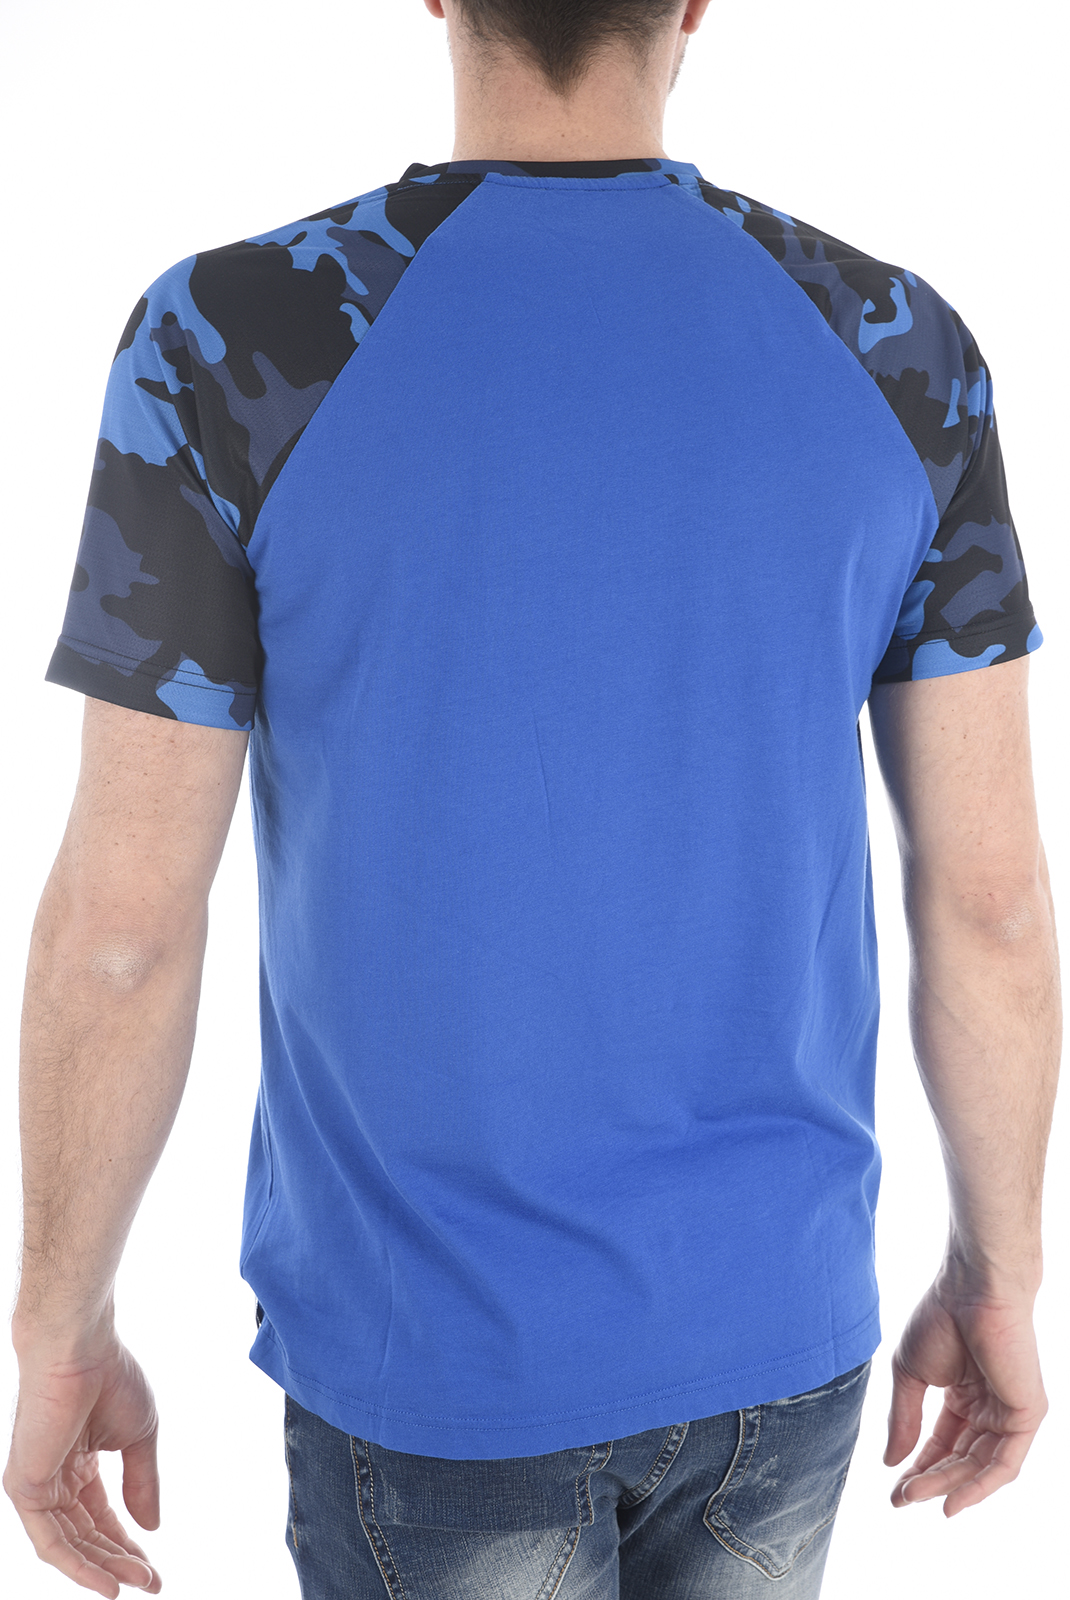 Emporio Armani Tee-shirt Bleu Royal À Manches Courtes 3ypti1 Pjd8z